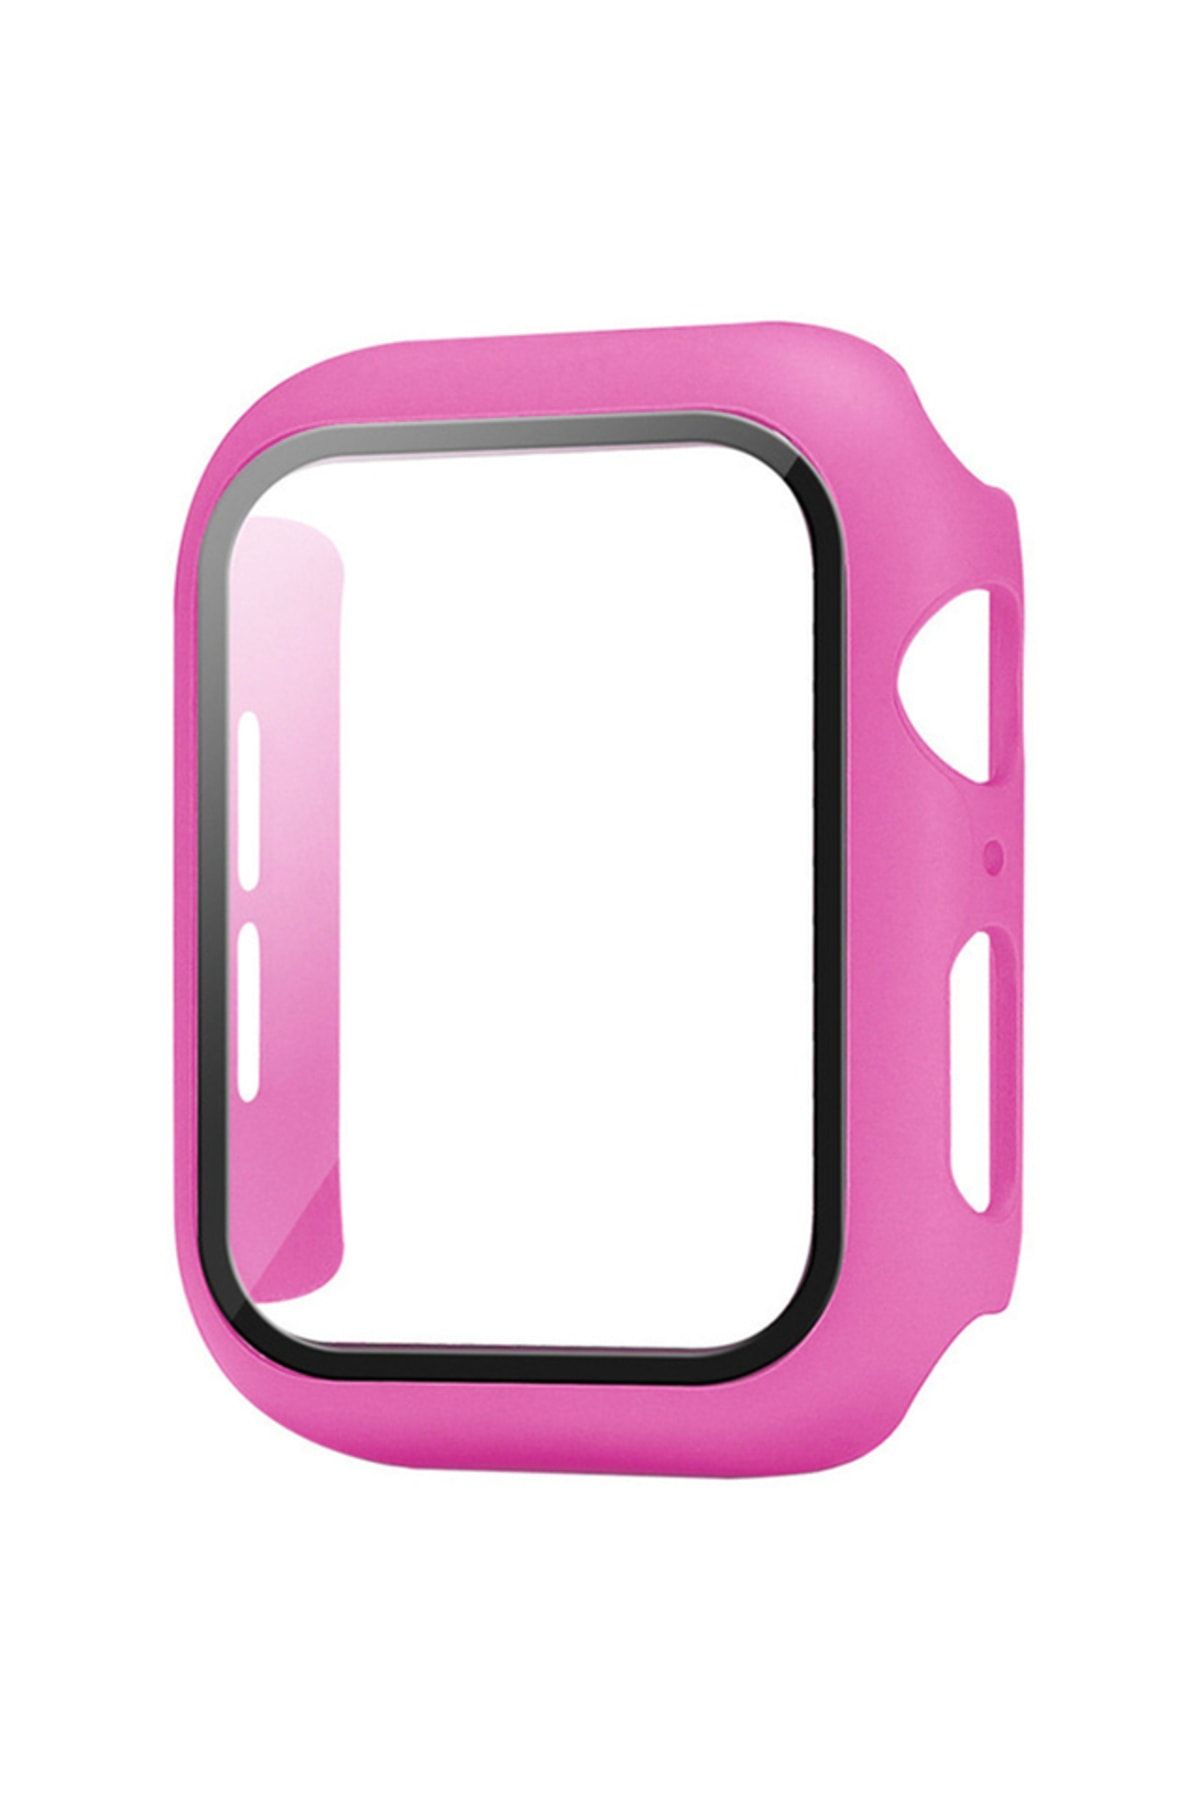 QUSE Apple Watch Seri 3-2 42mm Uyumlu Ekran ve Kasa Koruyucu Barbie Pembesi